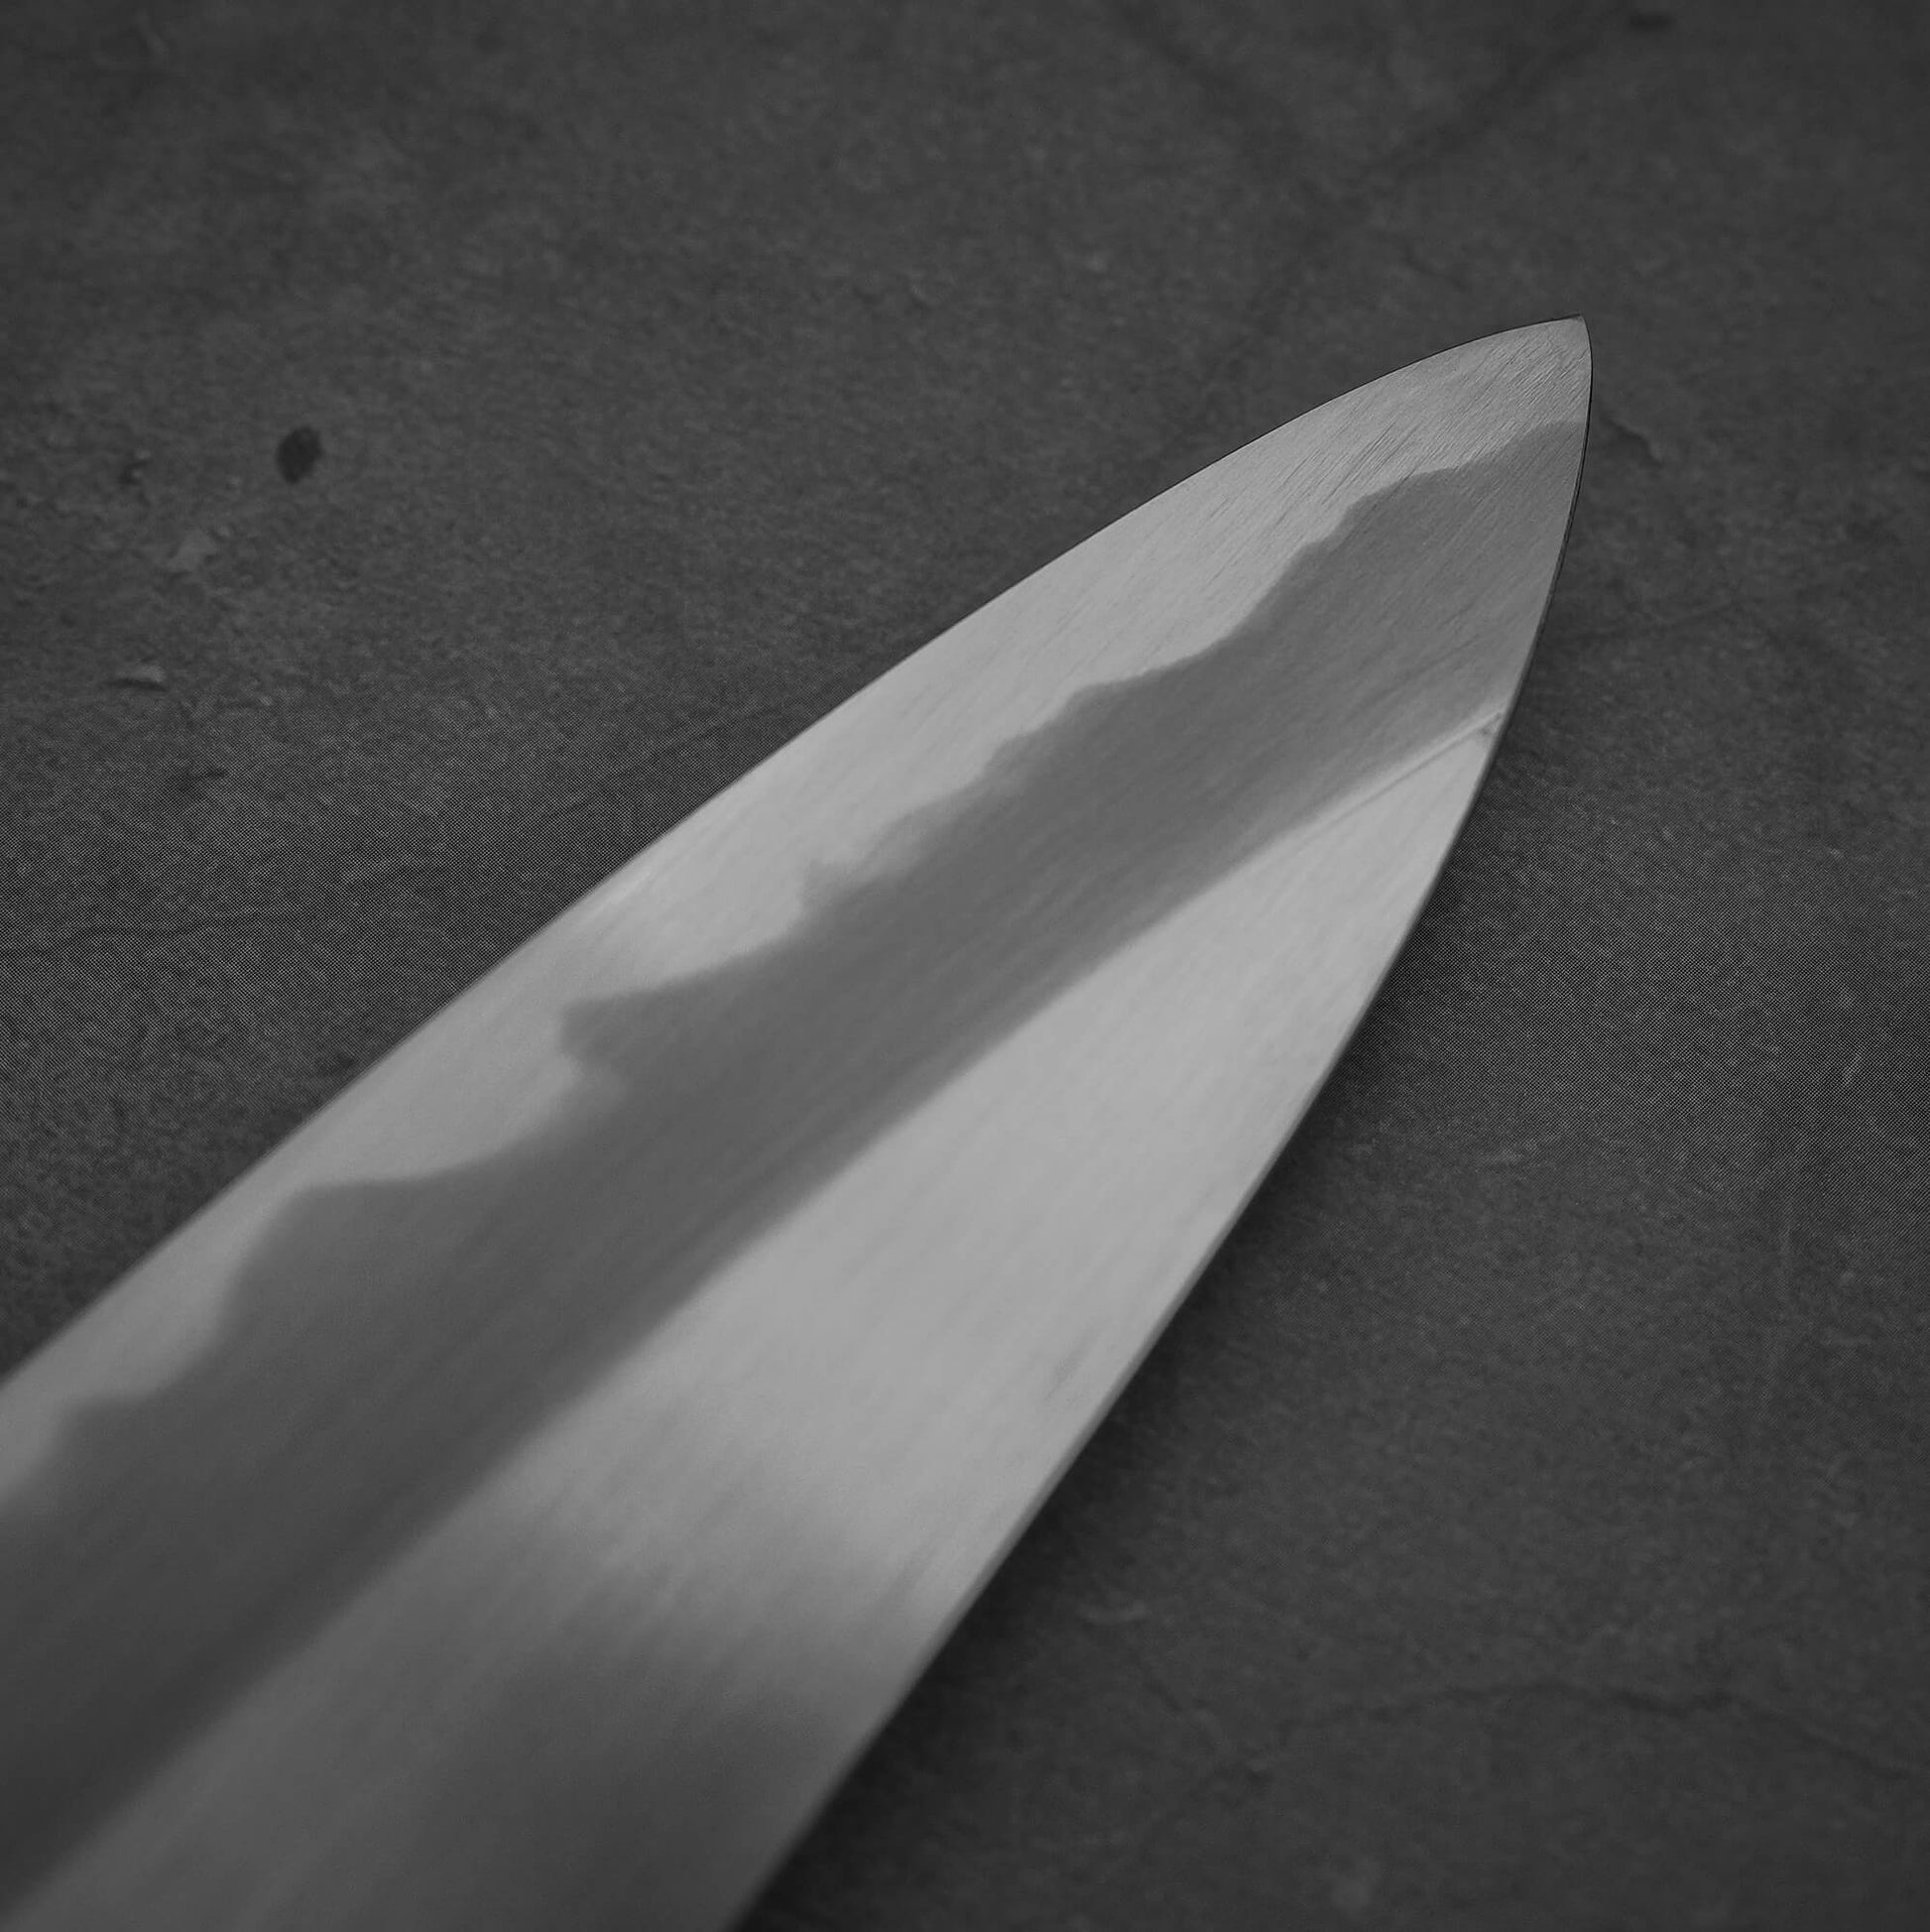 Close up view of the tip area of Nakagawa shinogi aogami#2 gyuto knife